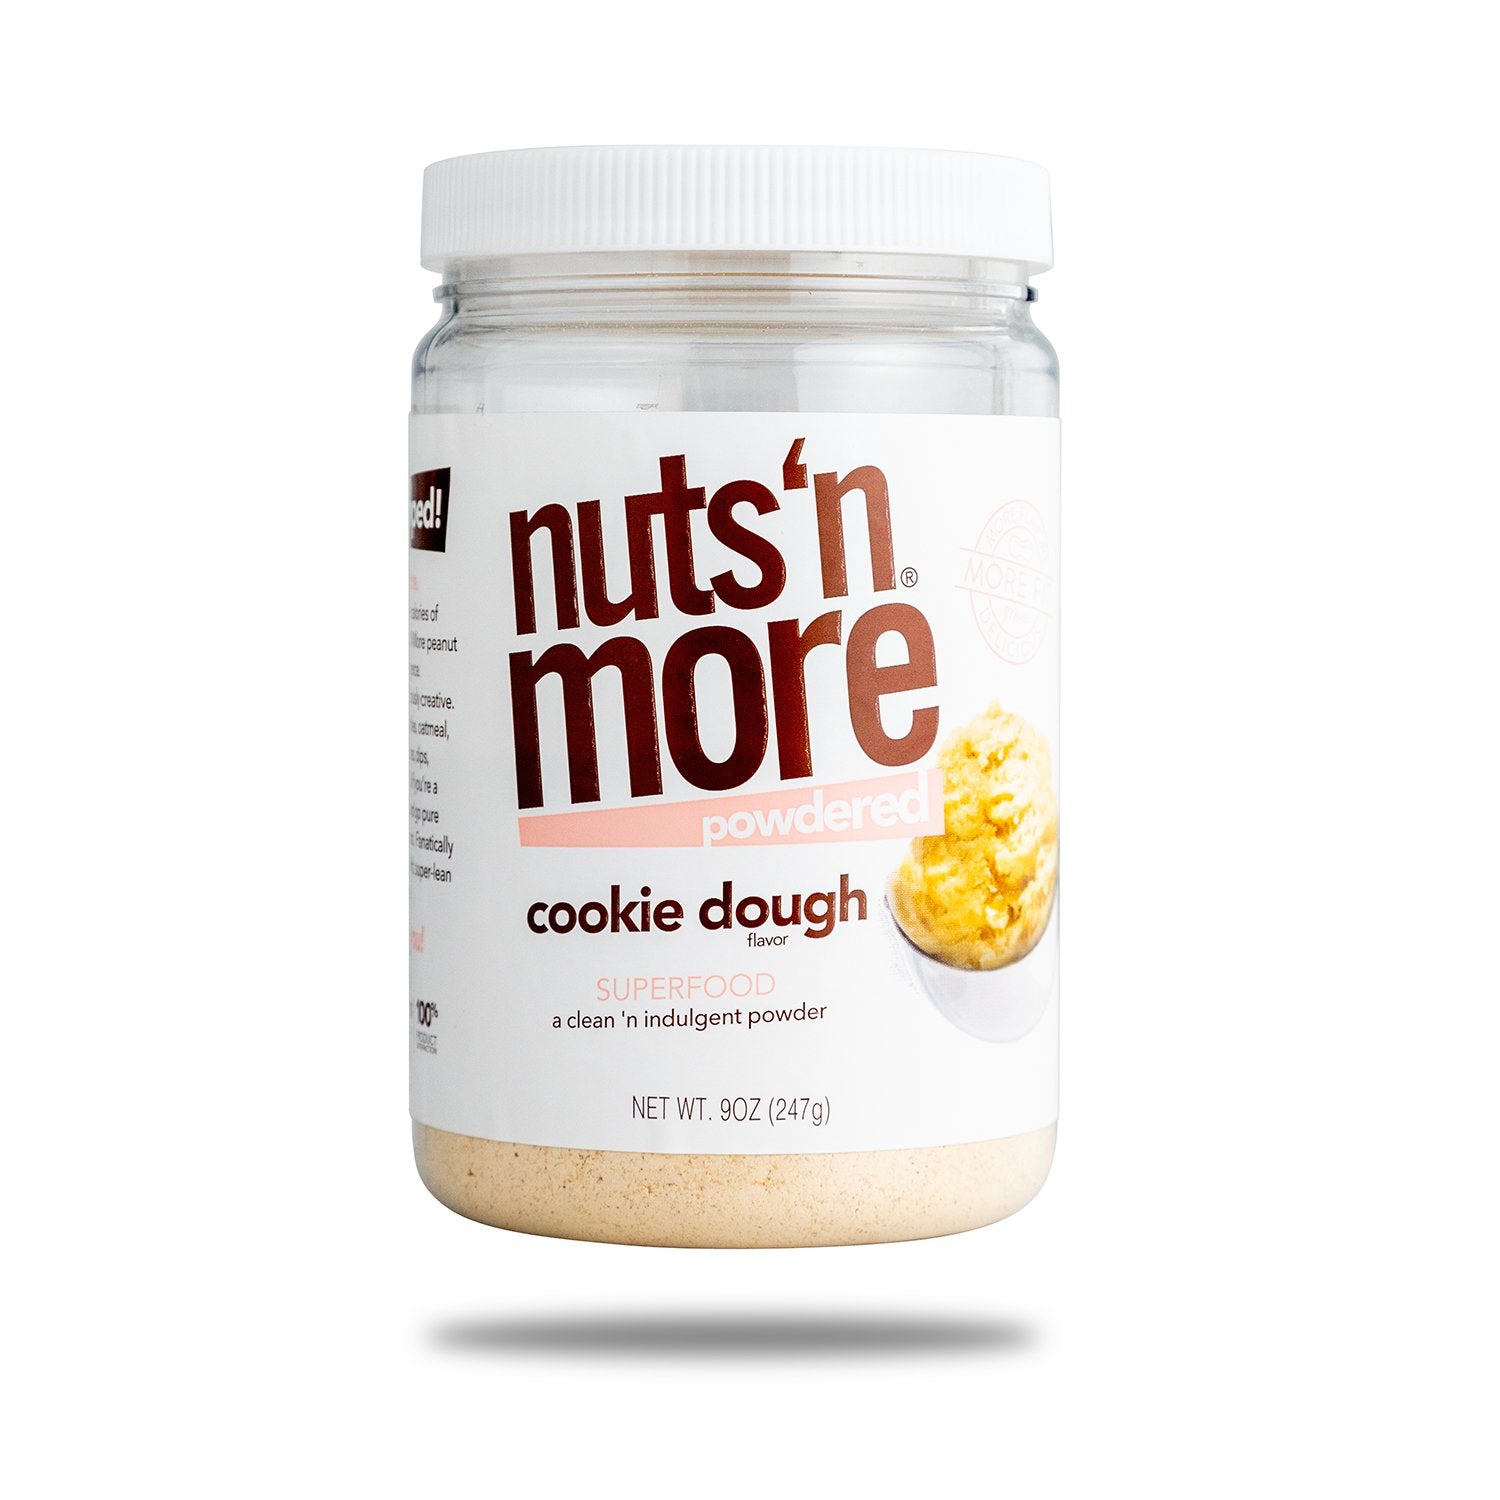 Nuts 'n More PB Powder Protein Snacks Cookie Dough Nuts 'n More